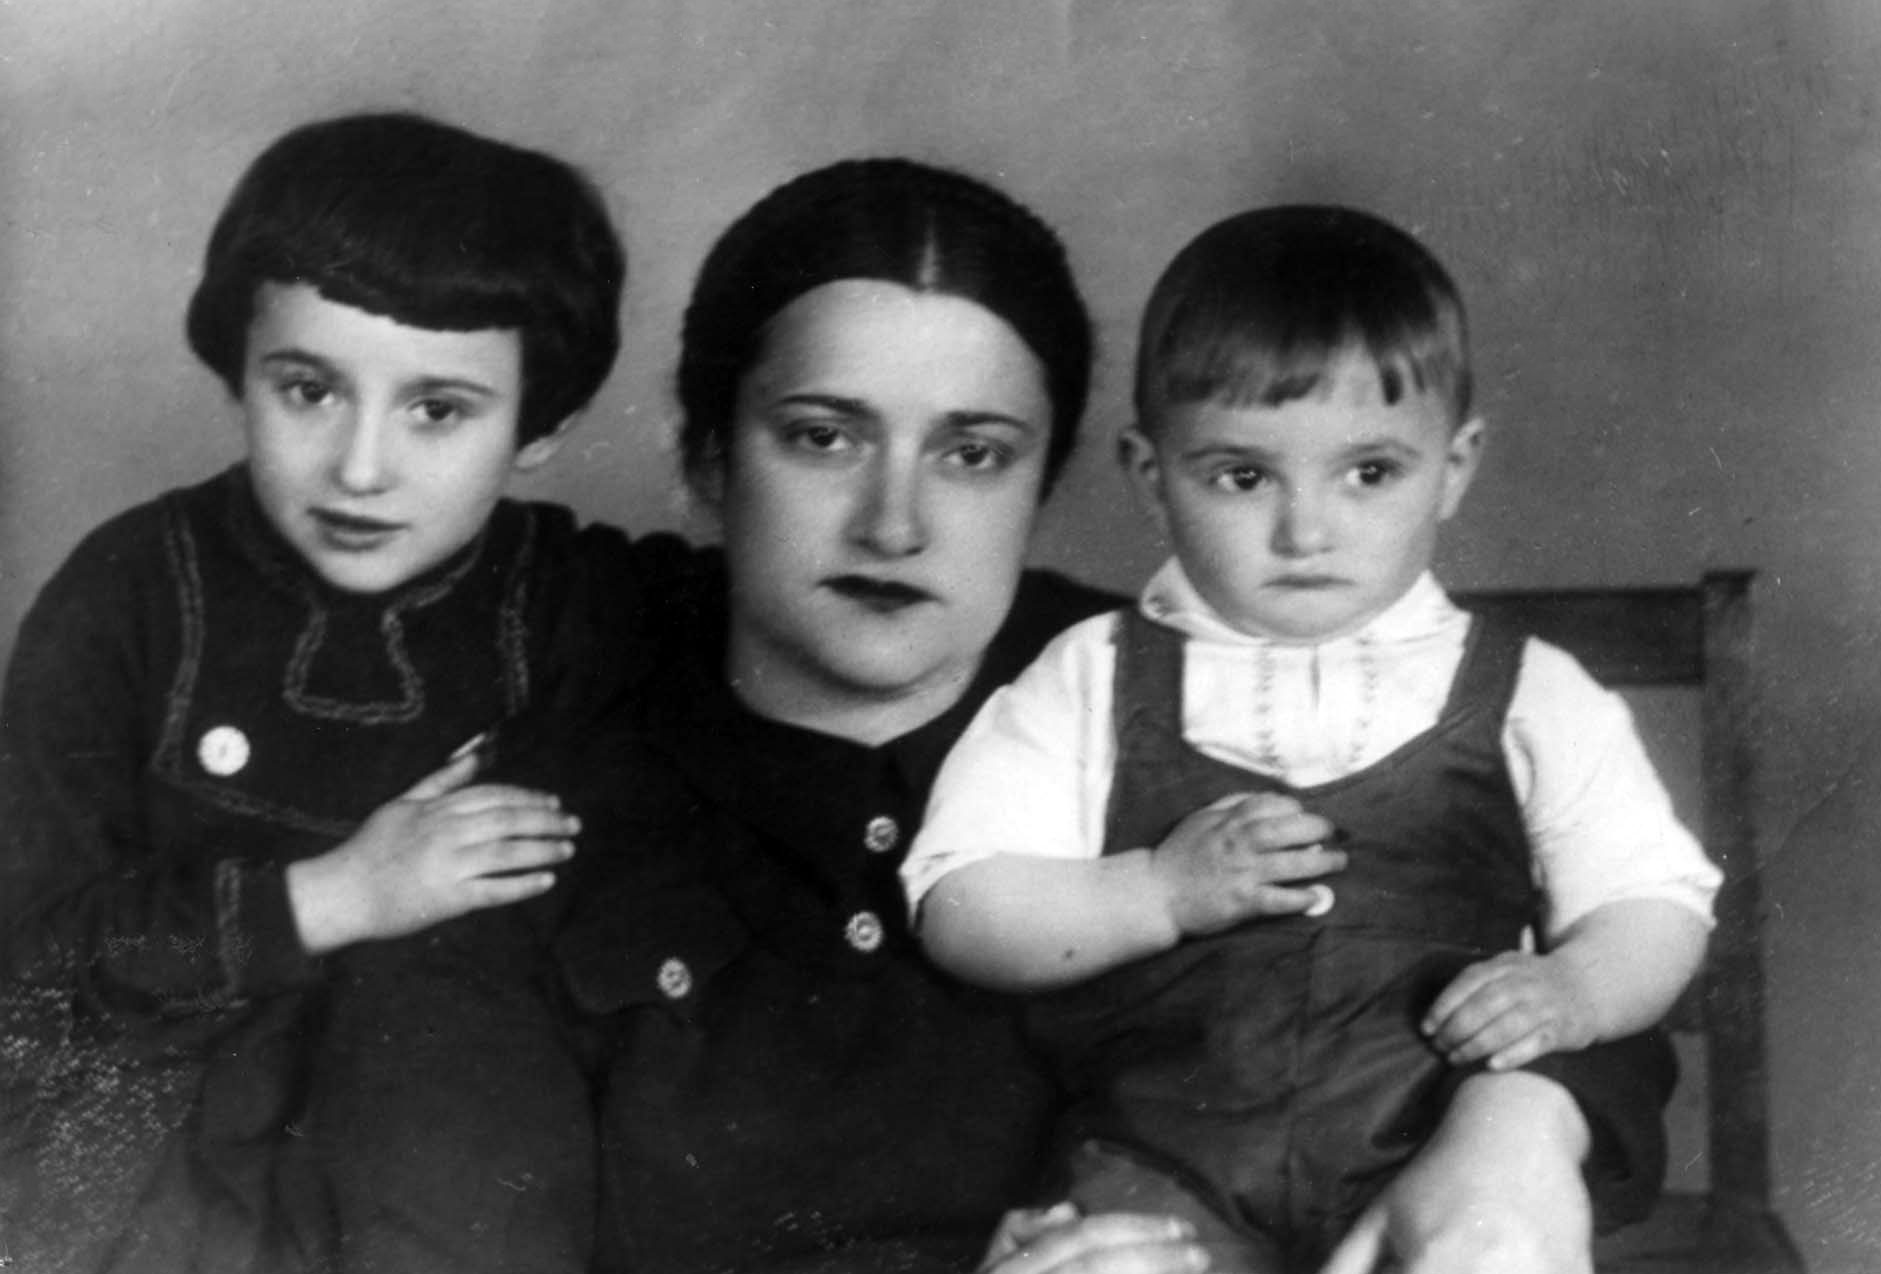 Tania Kotlyar was born in Kiev, Ukraine in 1915. She was murdered in September 1941 at Babi Yar. Her husband Boris survived.